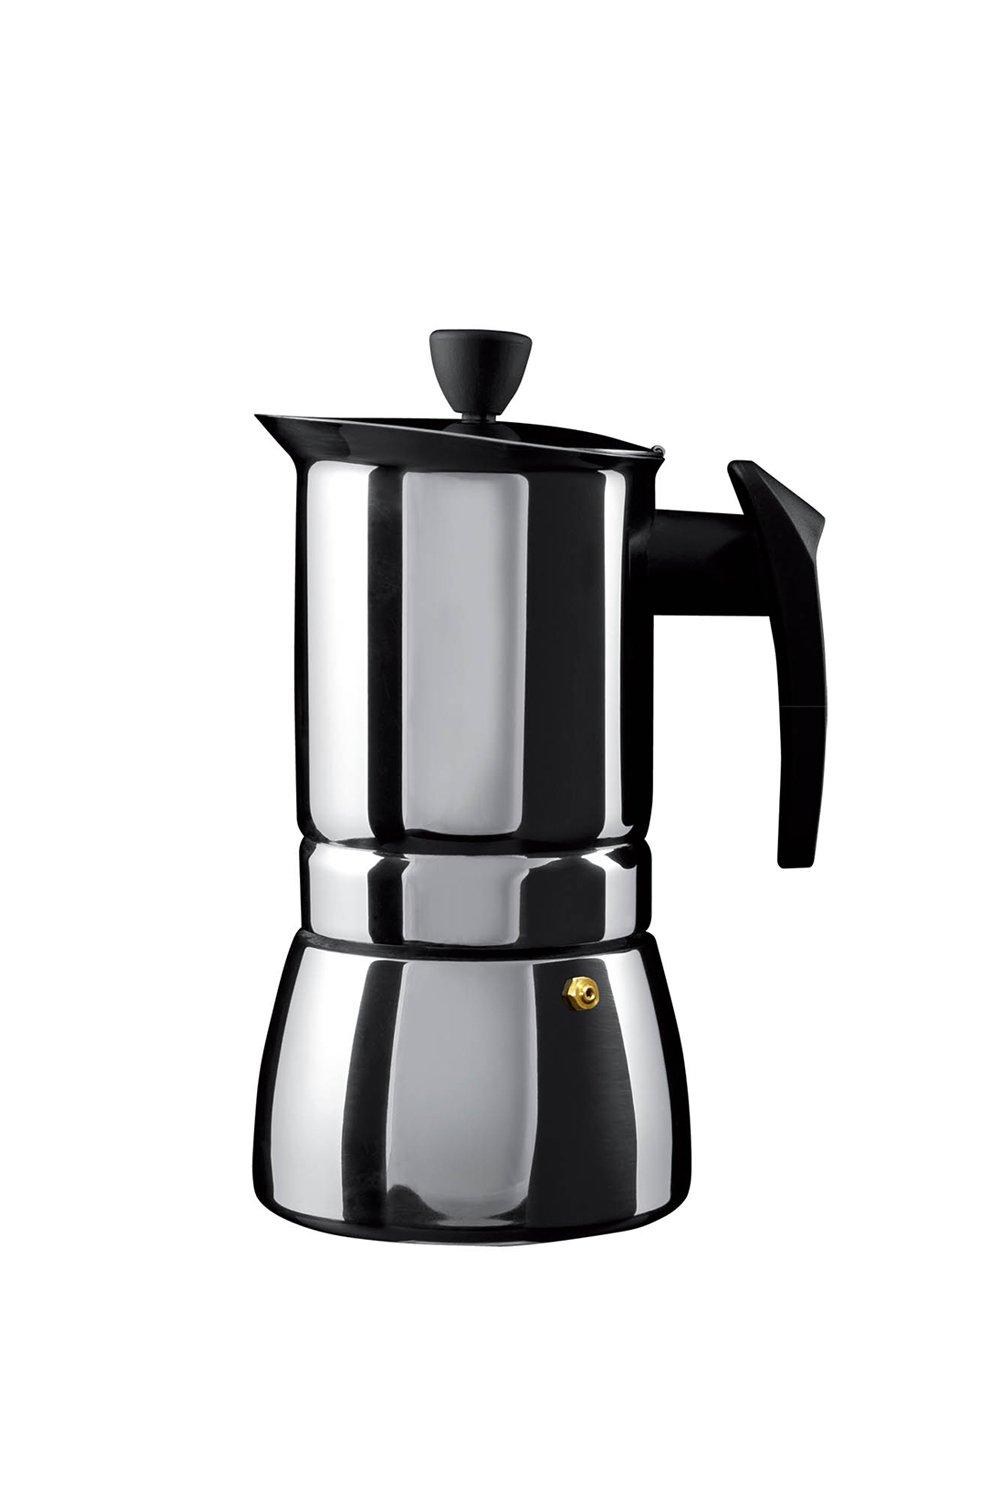 Grunwerg CAFÉ OLÉ 6 Cup Espresso Coffee Maker|silver